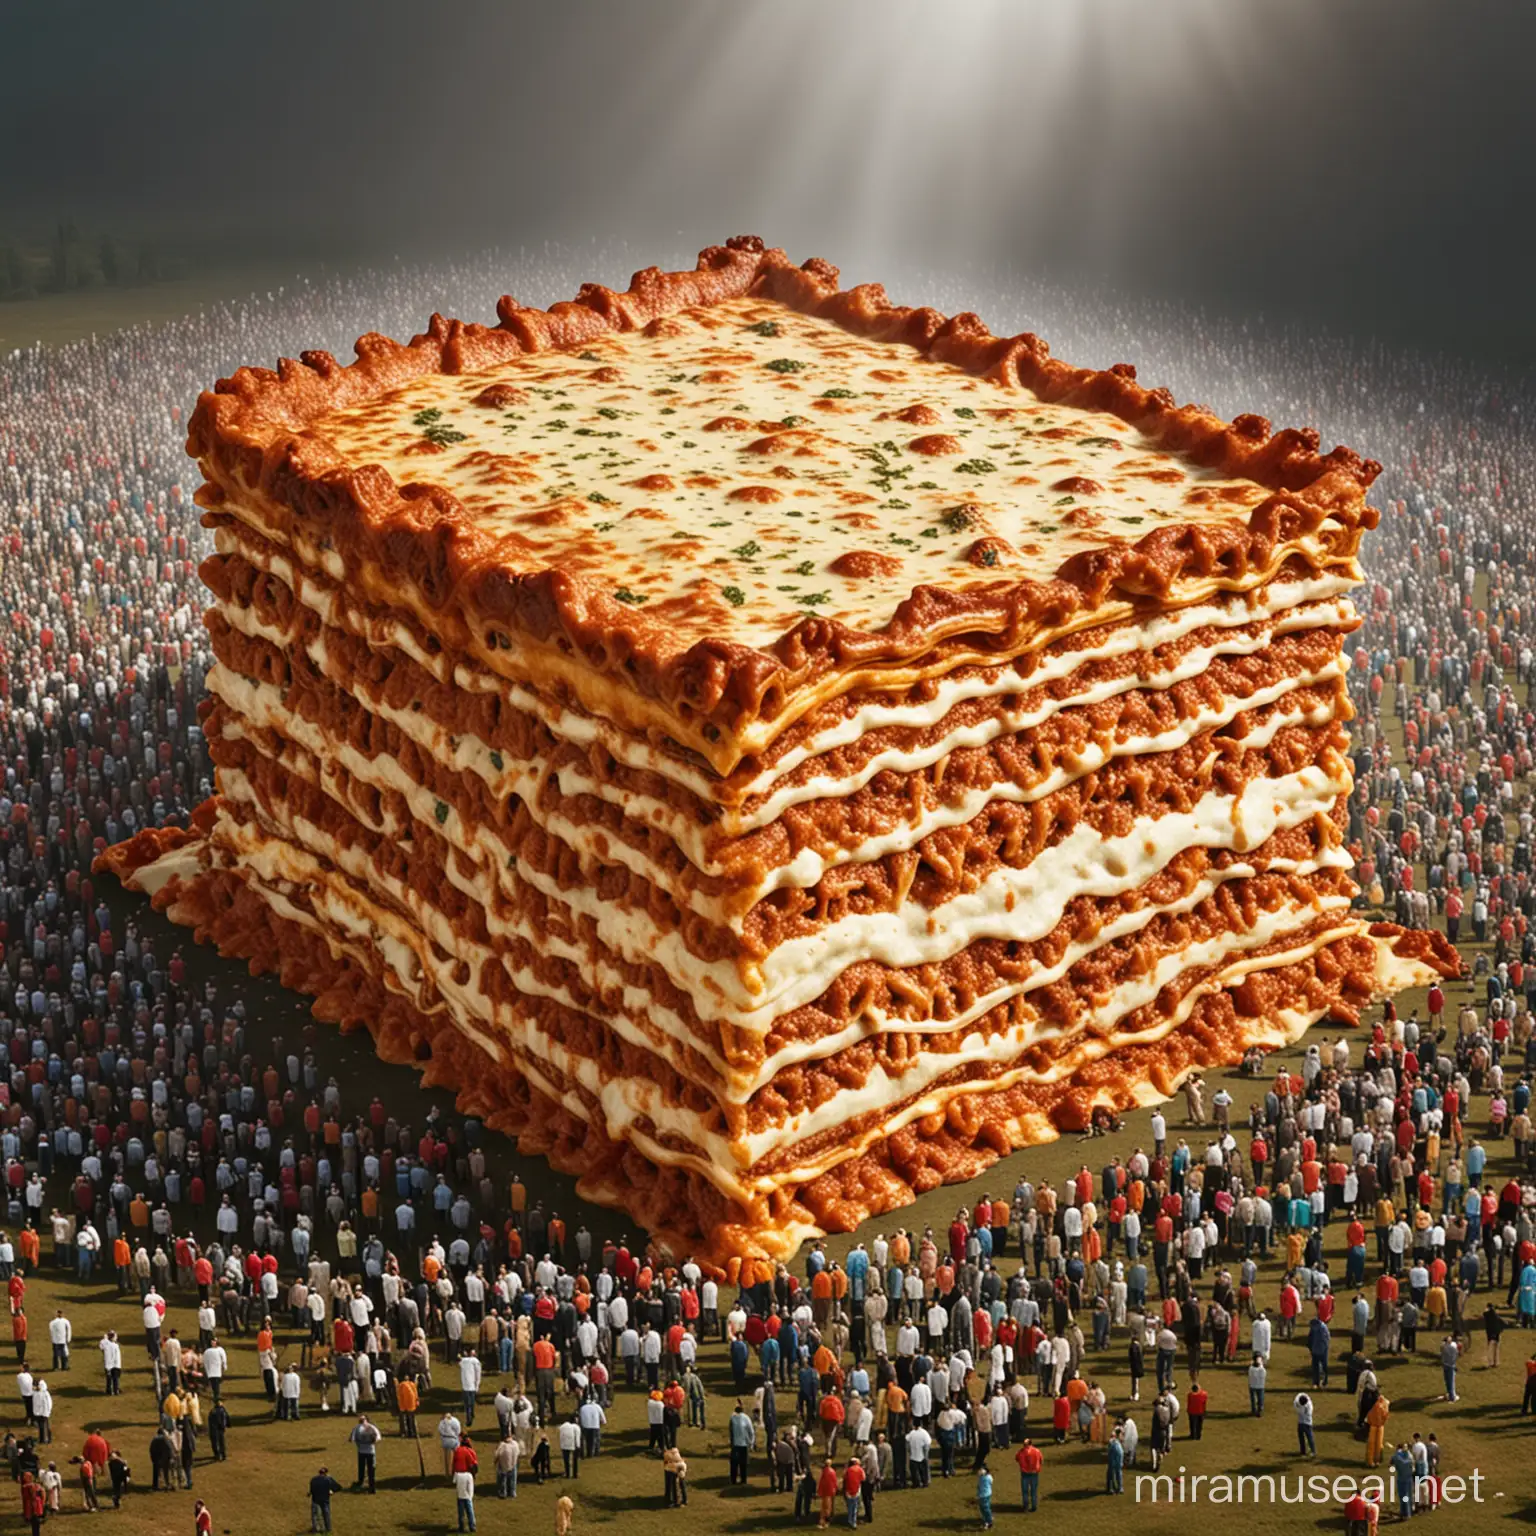 Humans worshipping a giant sentient lasagna. 
